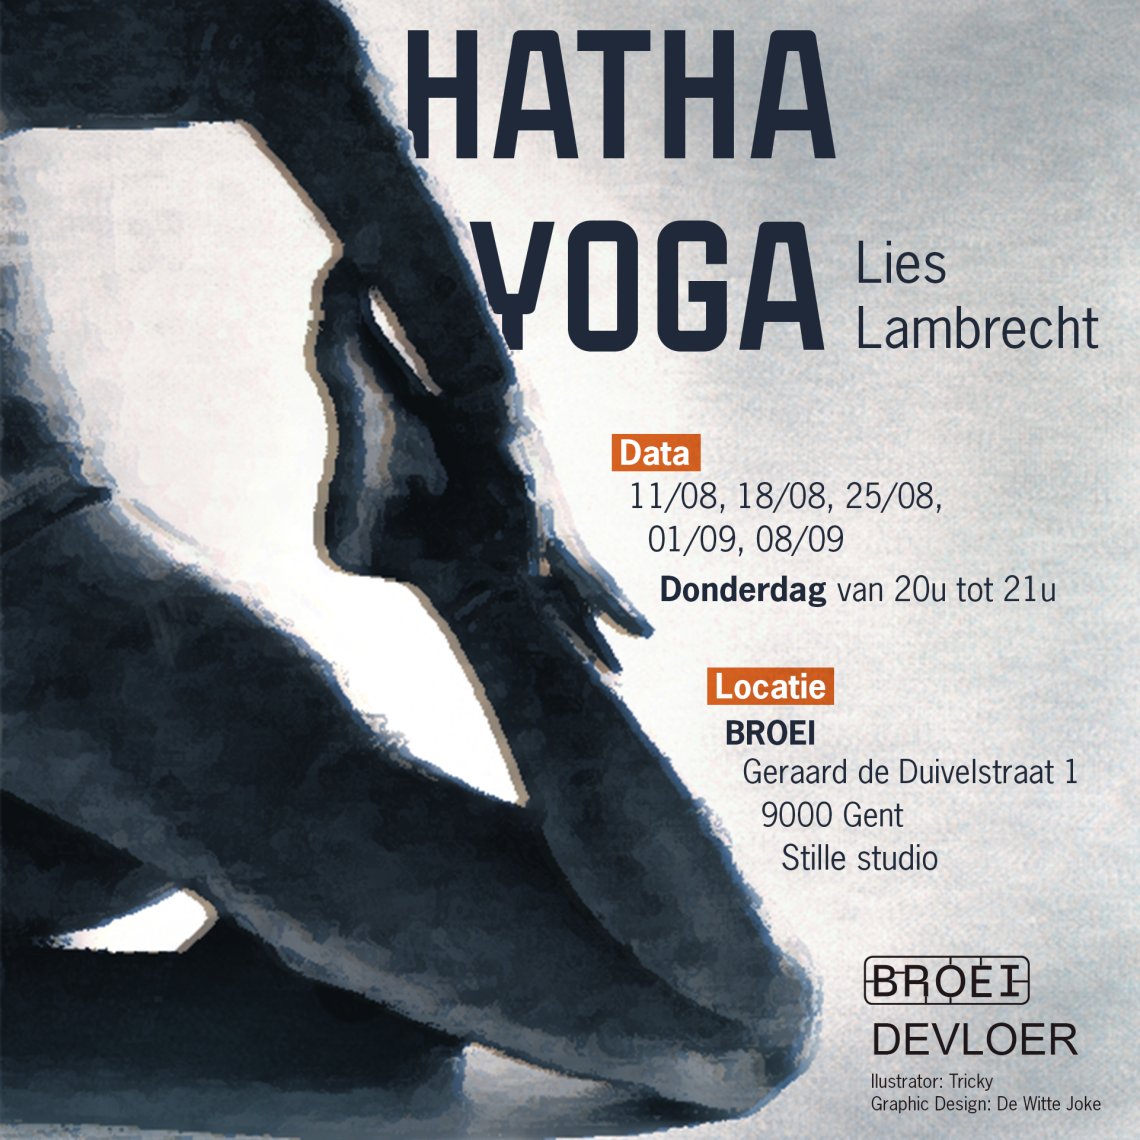 Hatha yoga - Lies Lambrecht